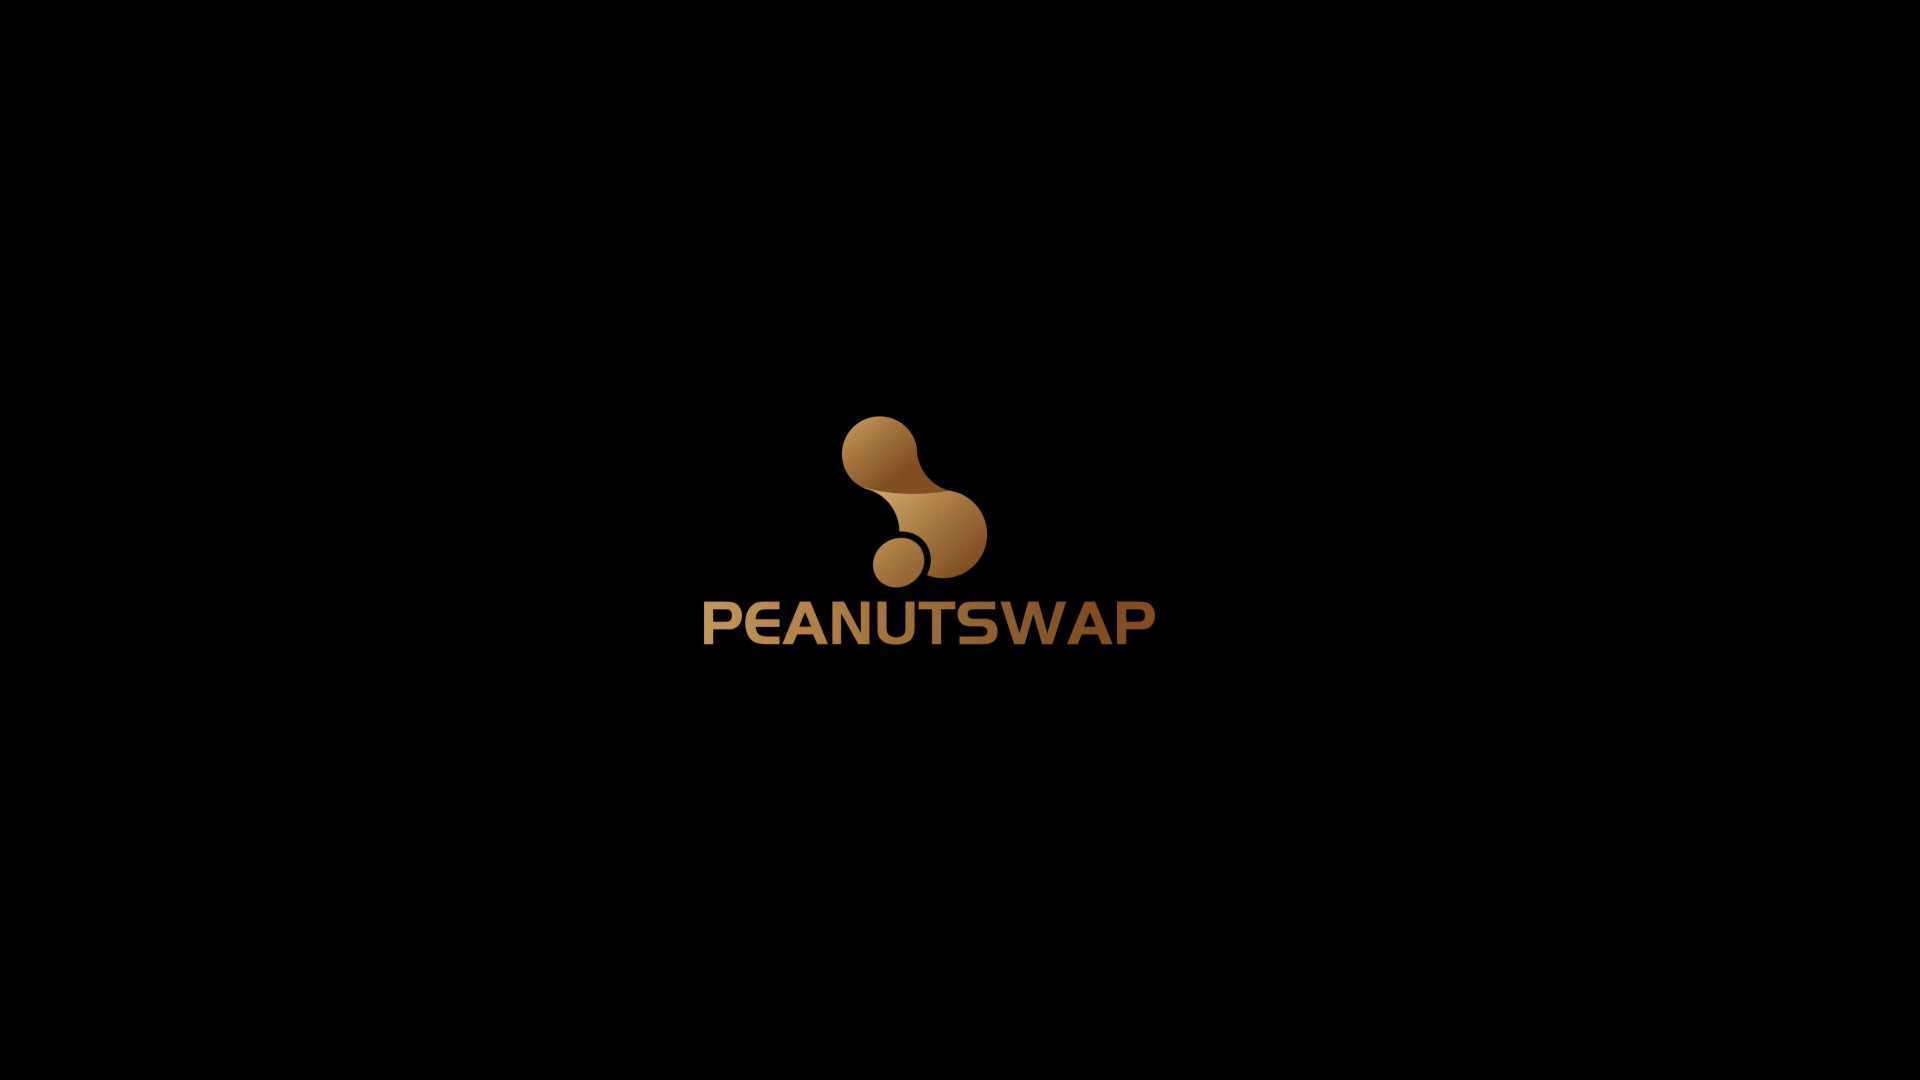 Peanutswap